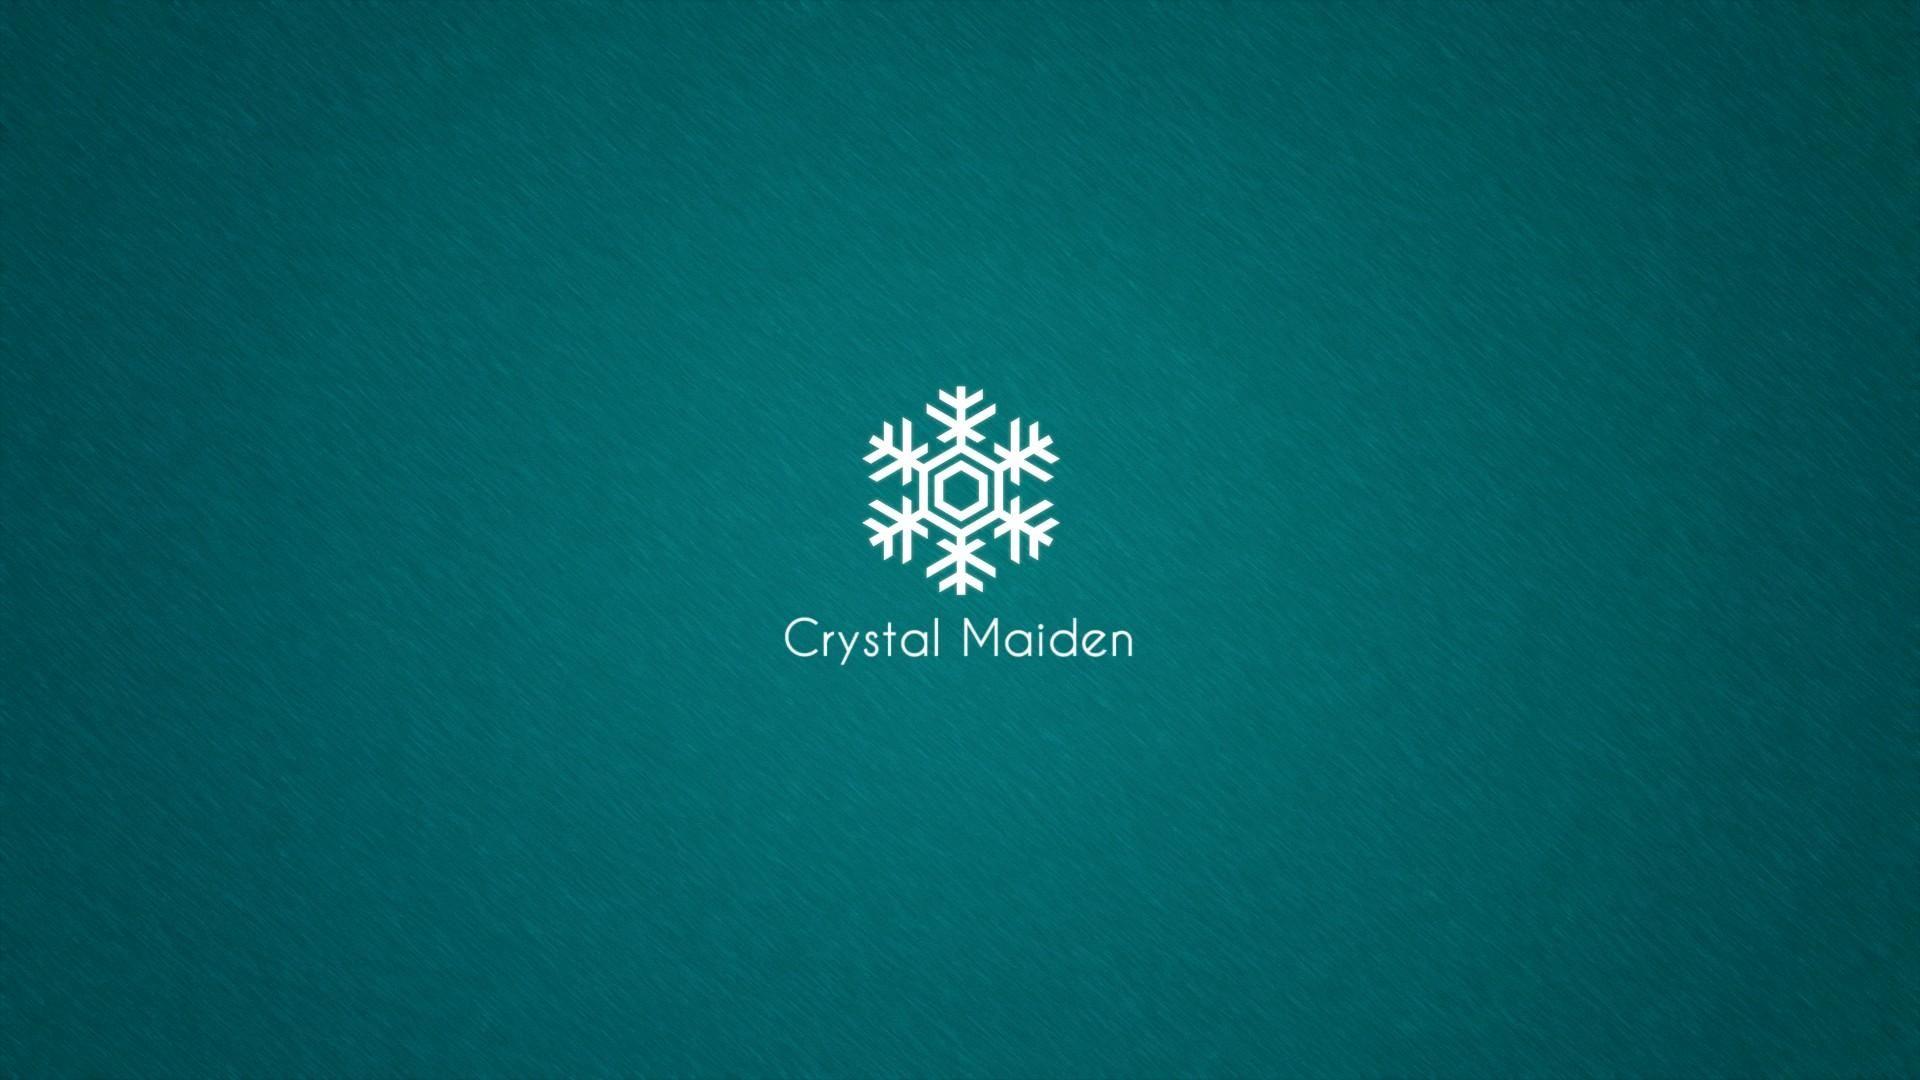 Snowflakes dota 2 crystal maiden wallpapers